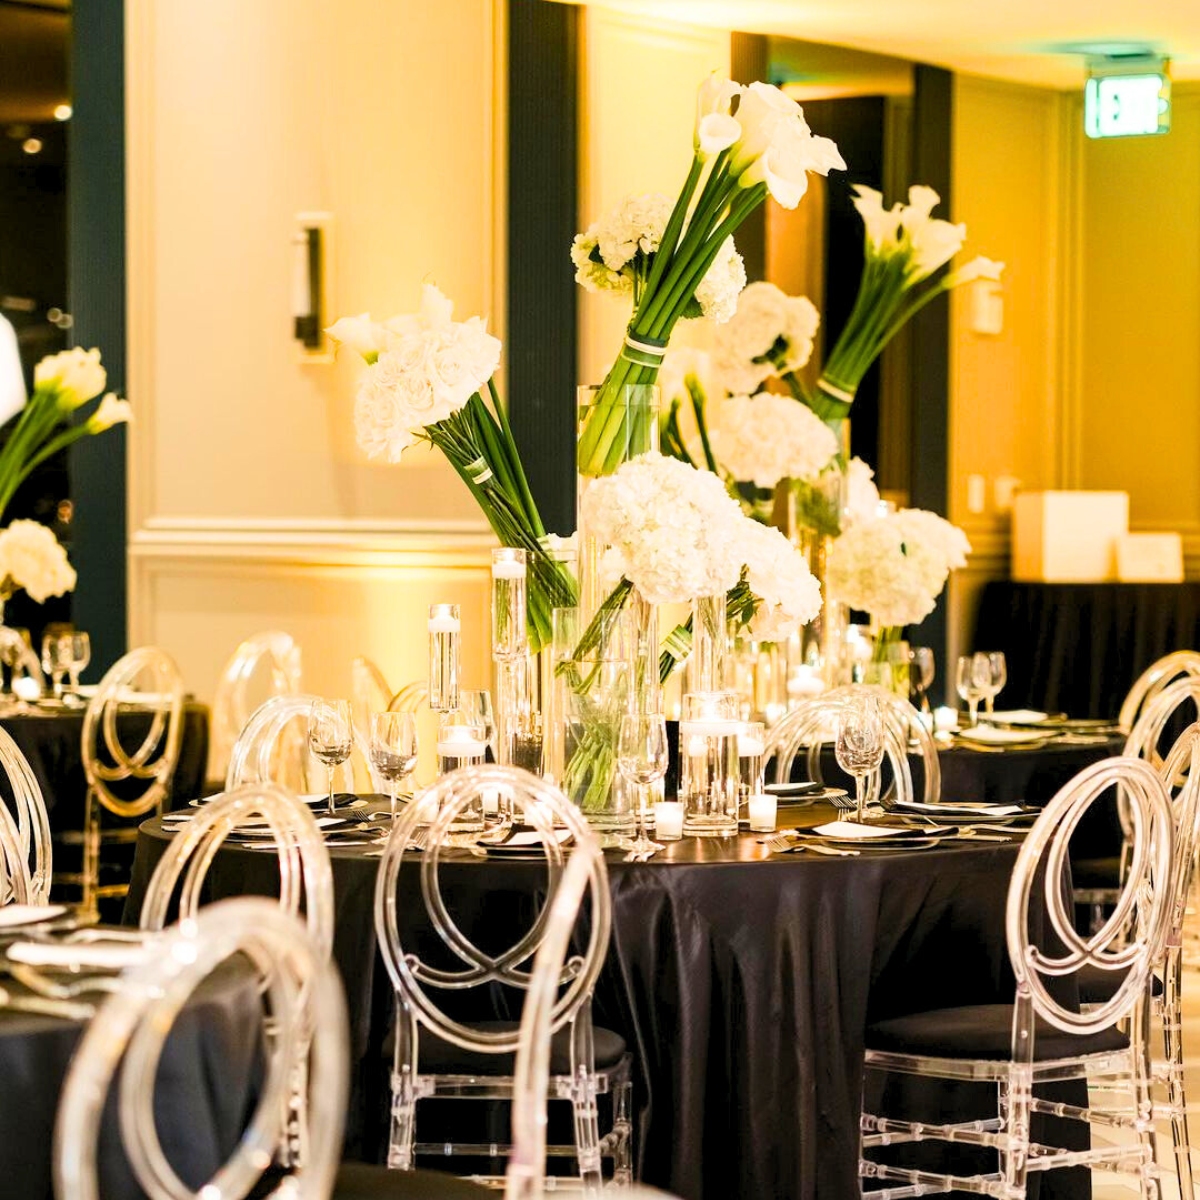 White callas and hydrangeas as wedding decor